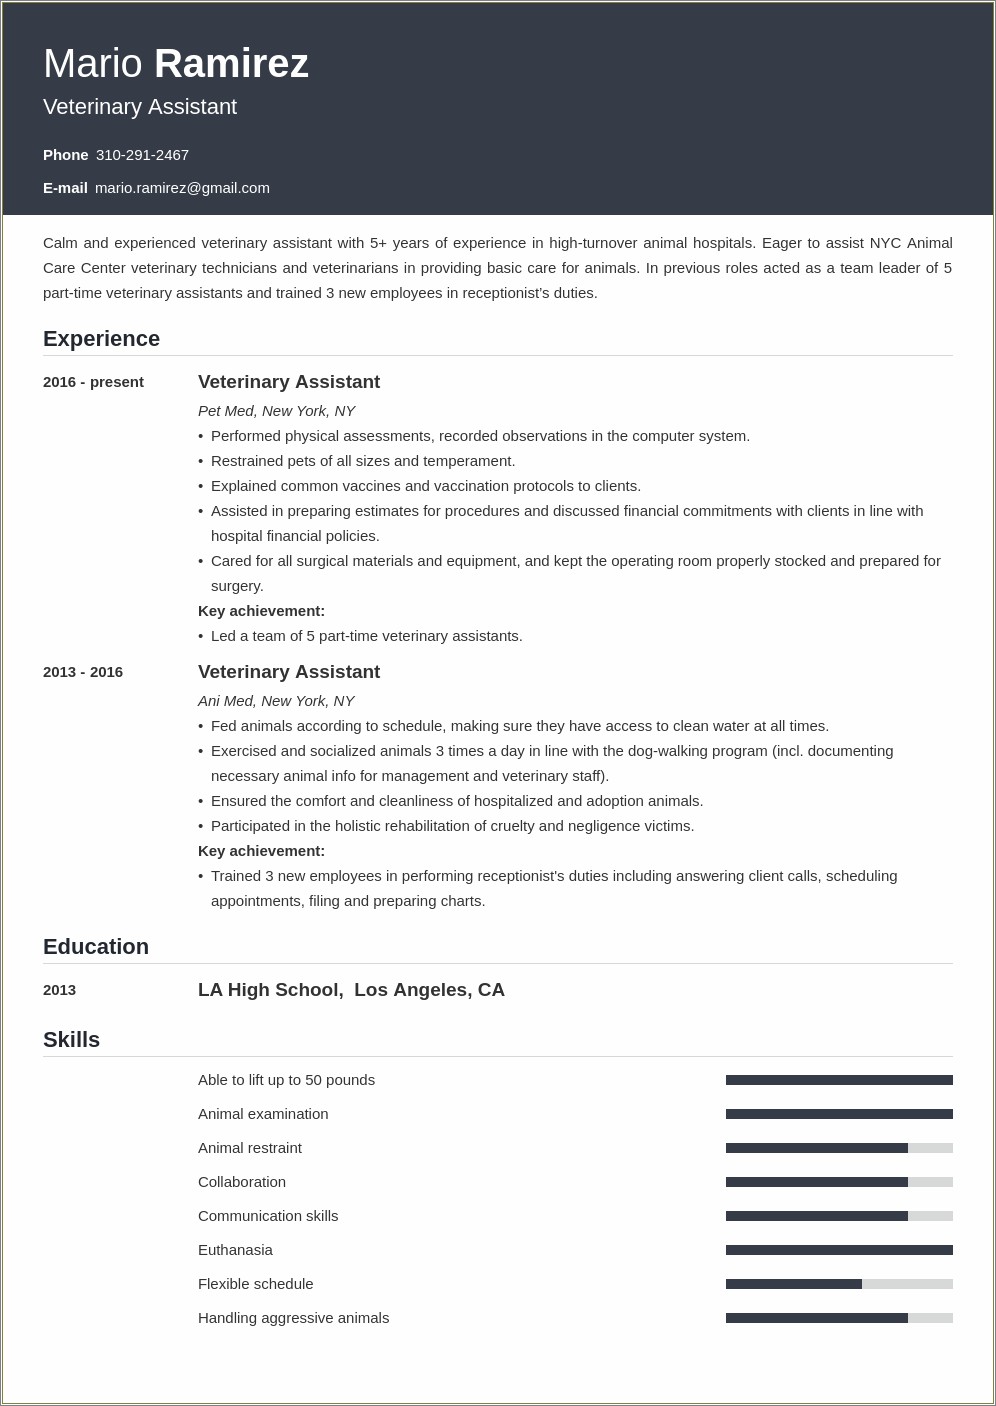 Job Description Resume Examples For Veterinary Assistant